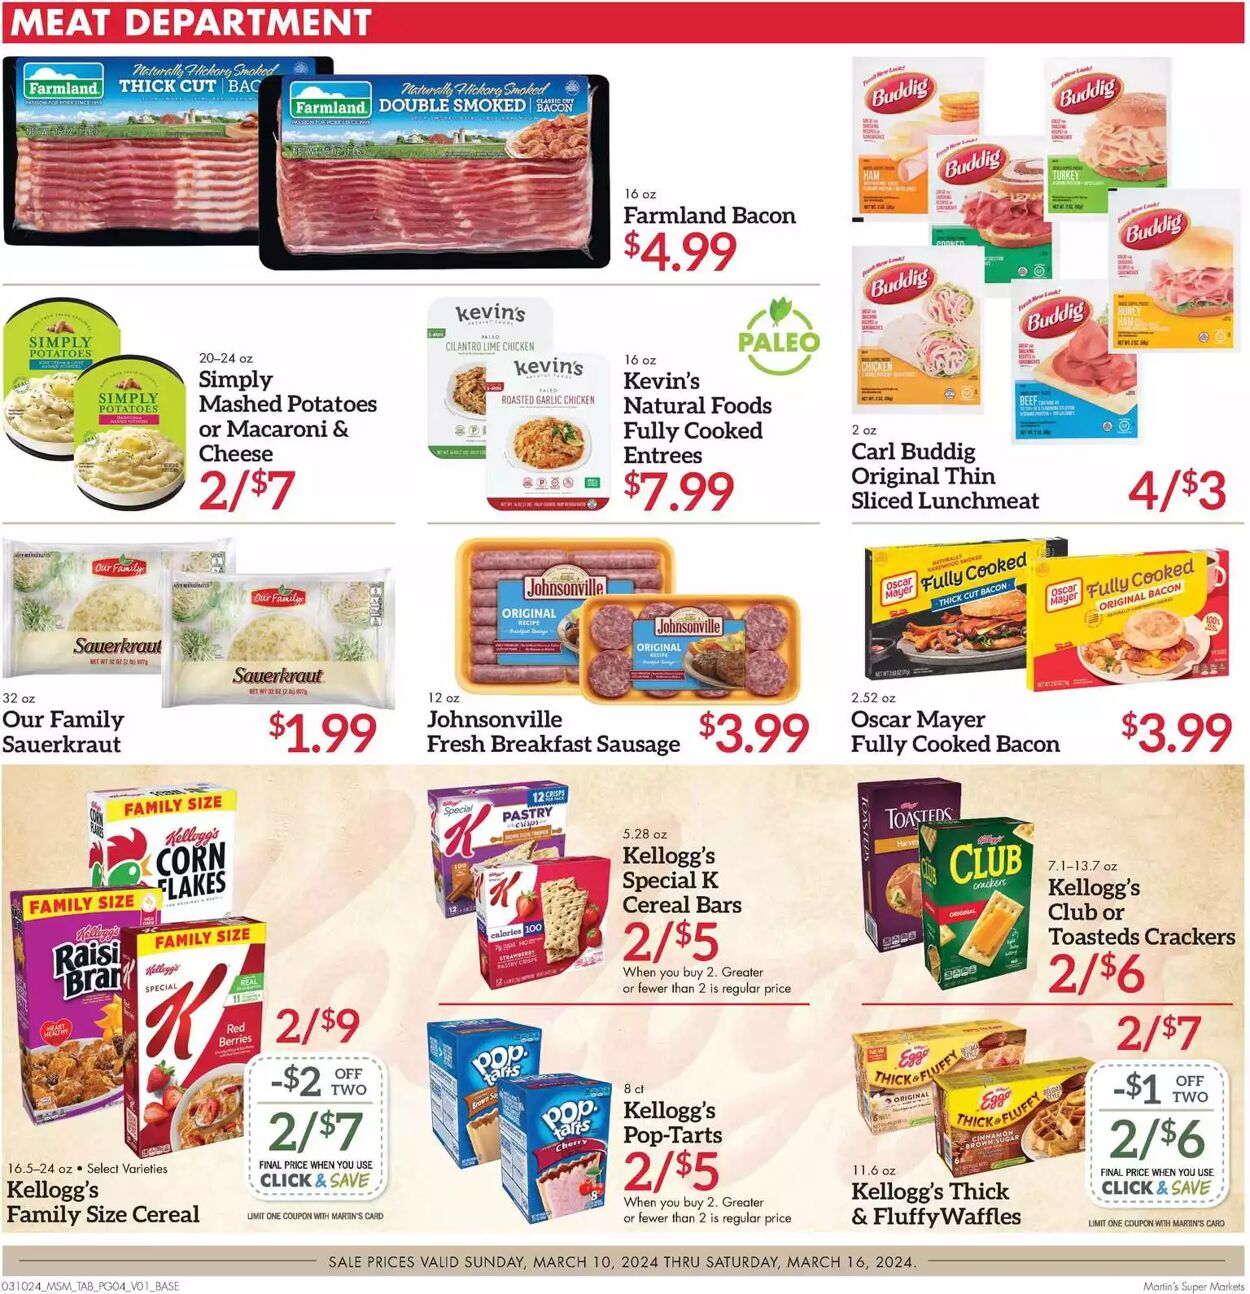 Weekly ad Martin's Supermarkets 03/10/2024 - 03/16/2024